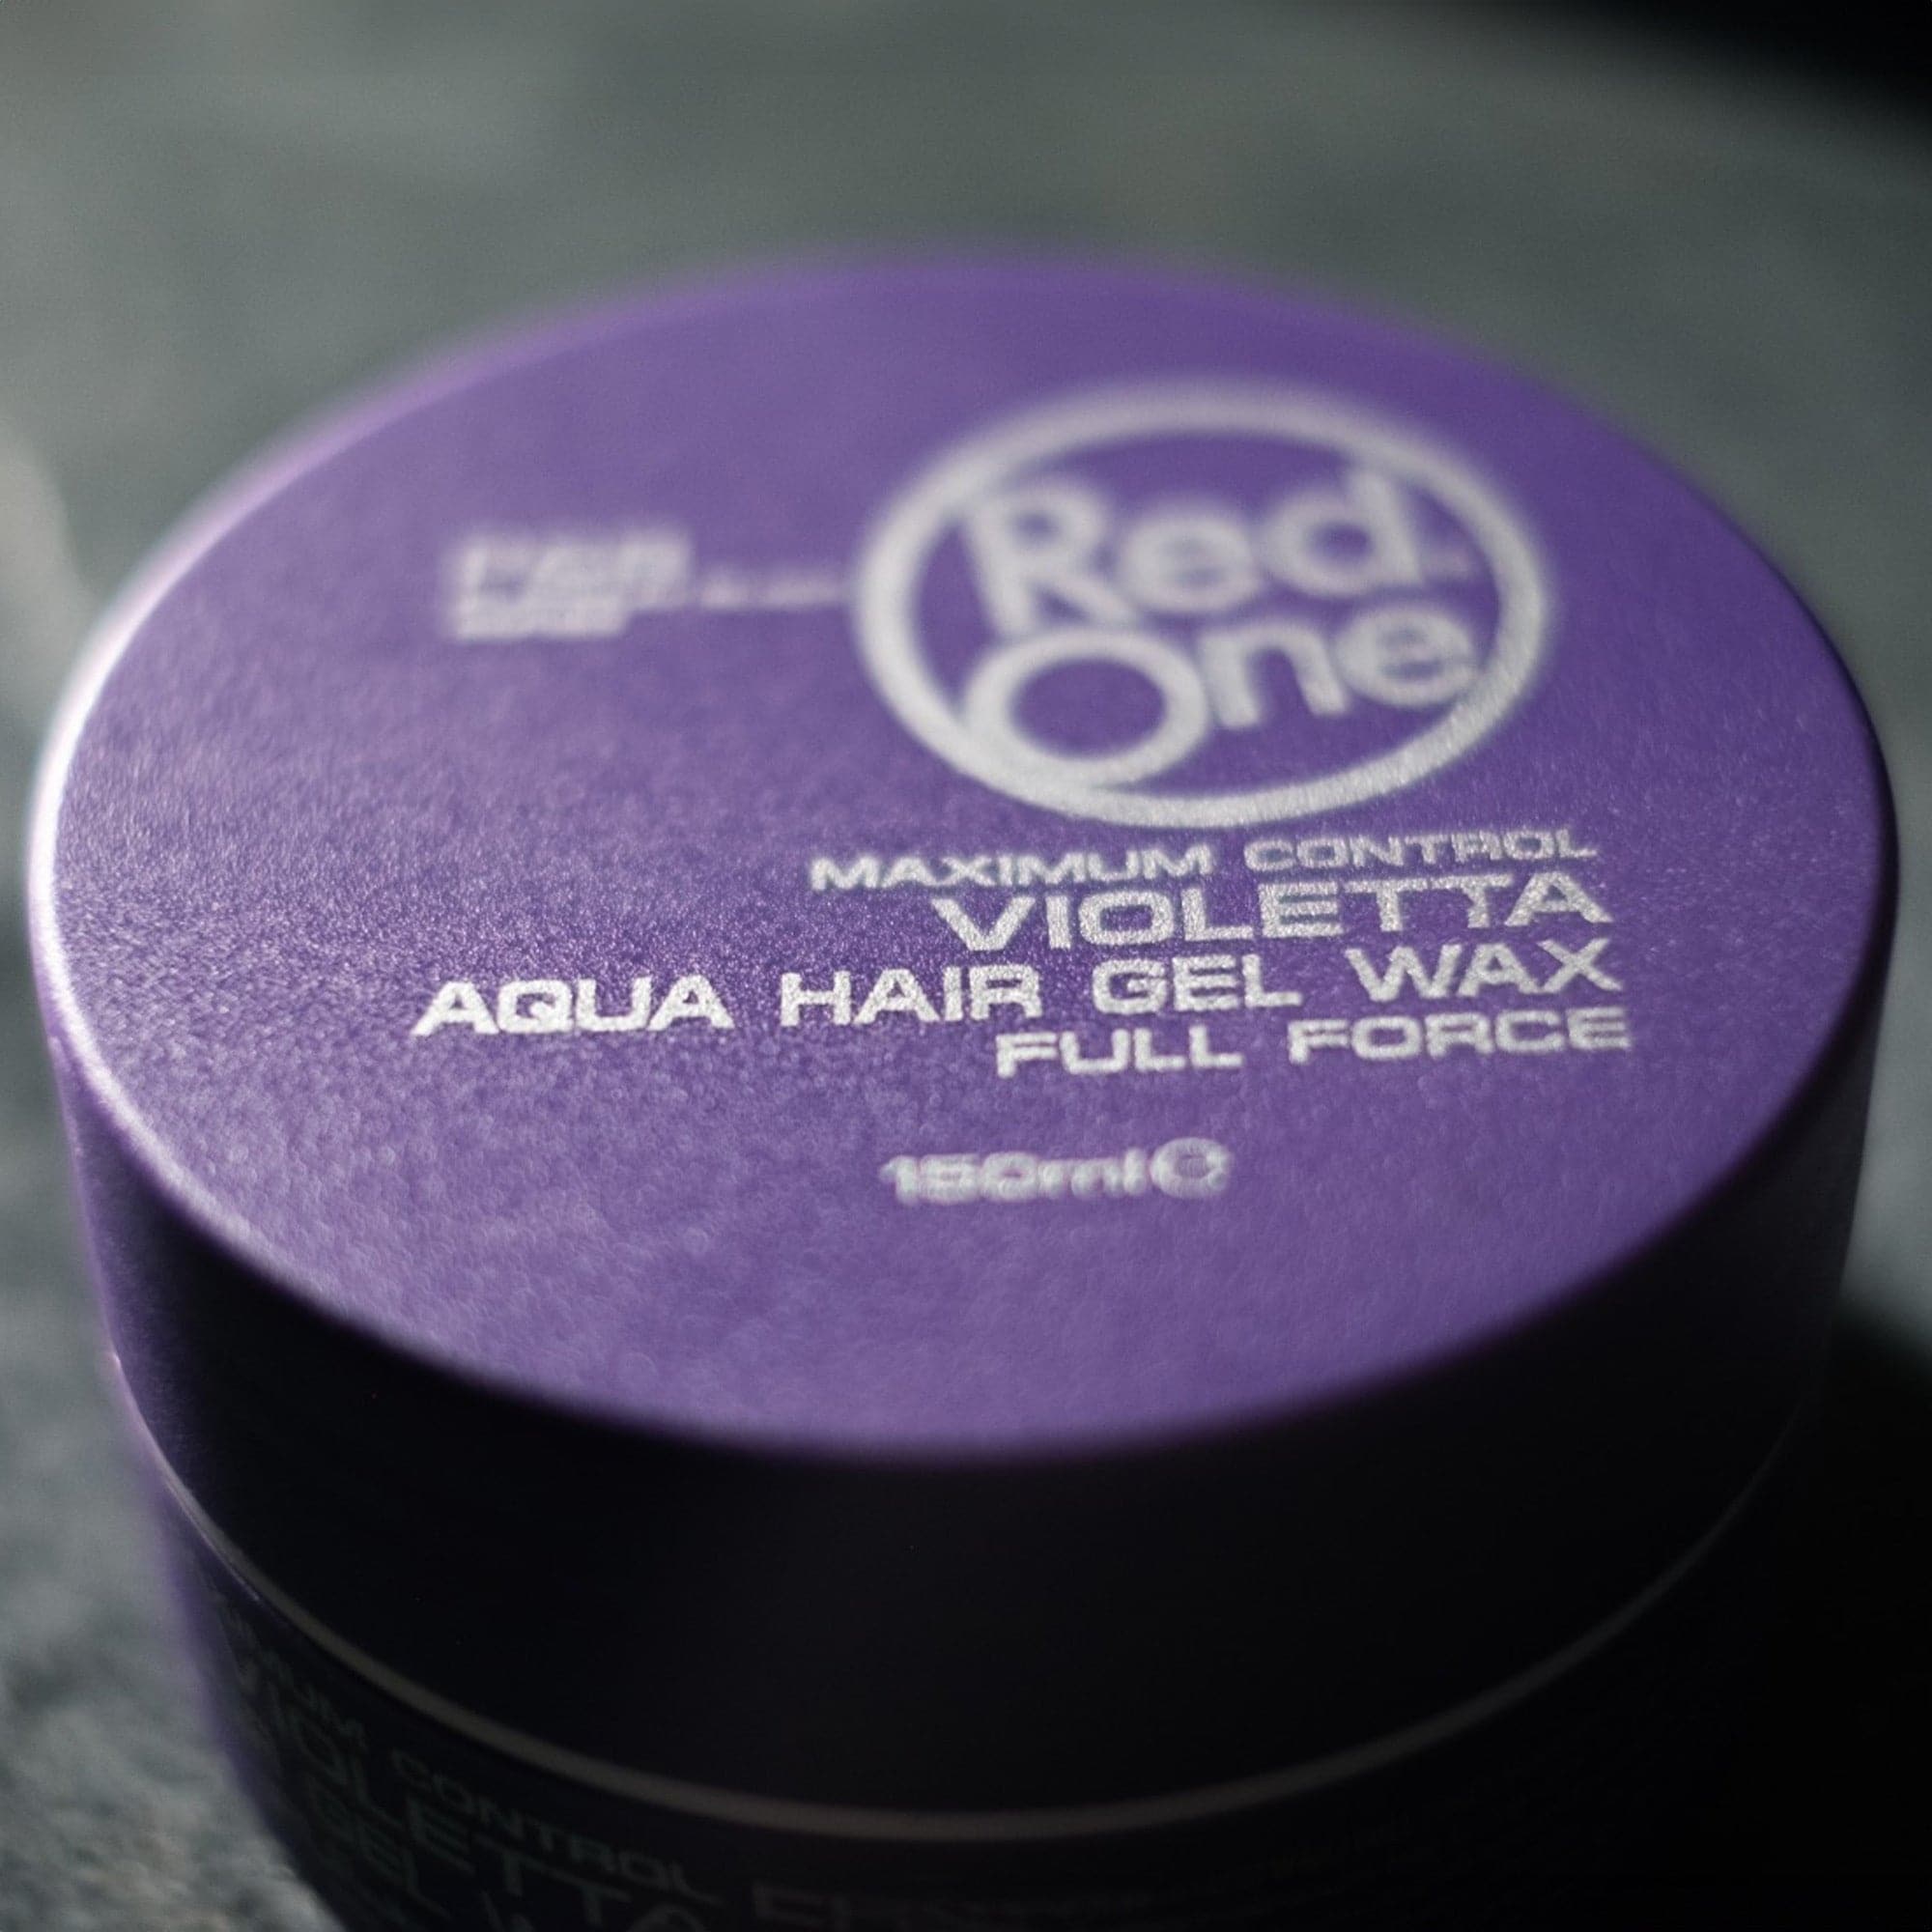 Redone - Aqua Hair Gel Wax Violetta Full Force Maximum Control 150ml